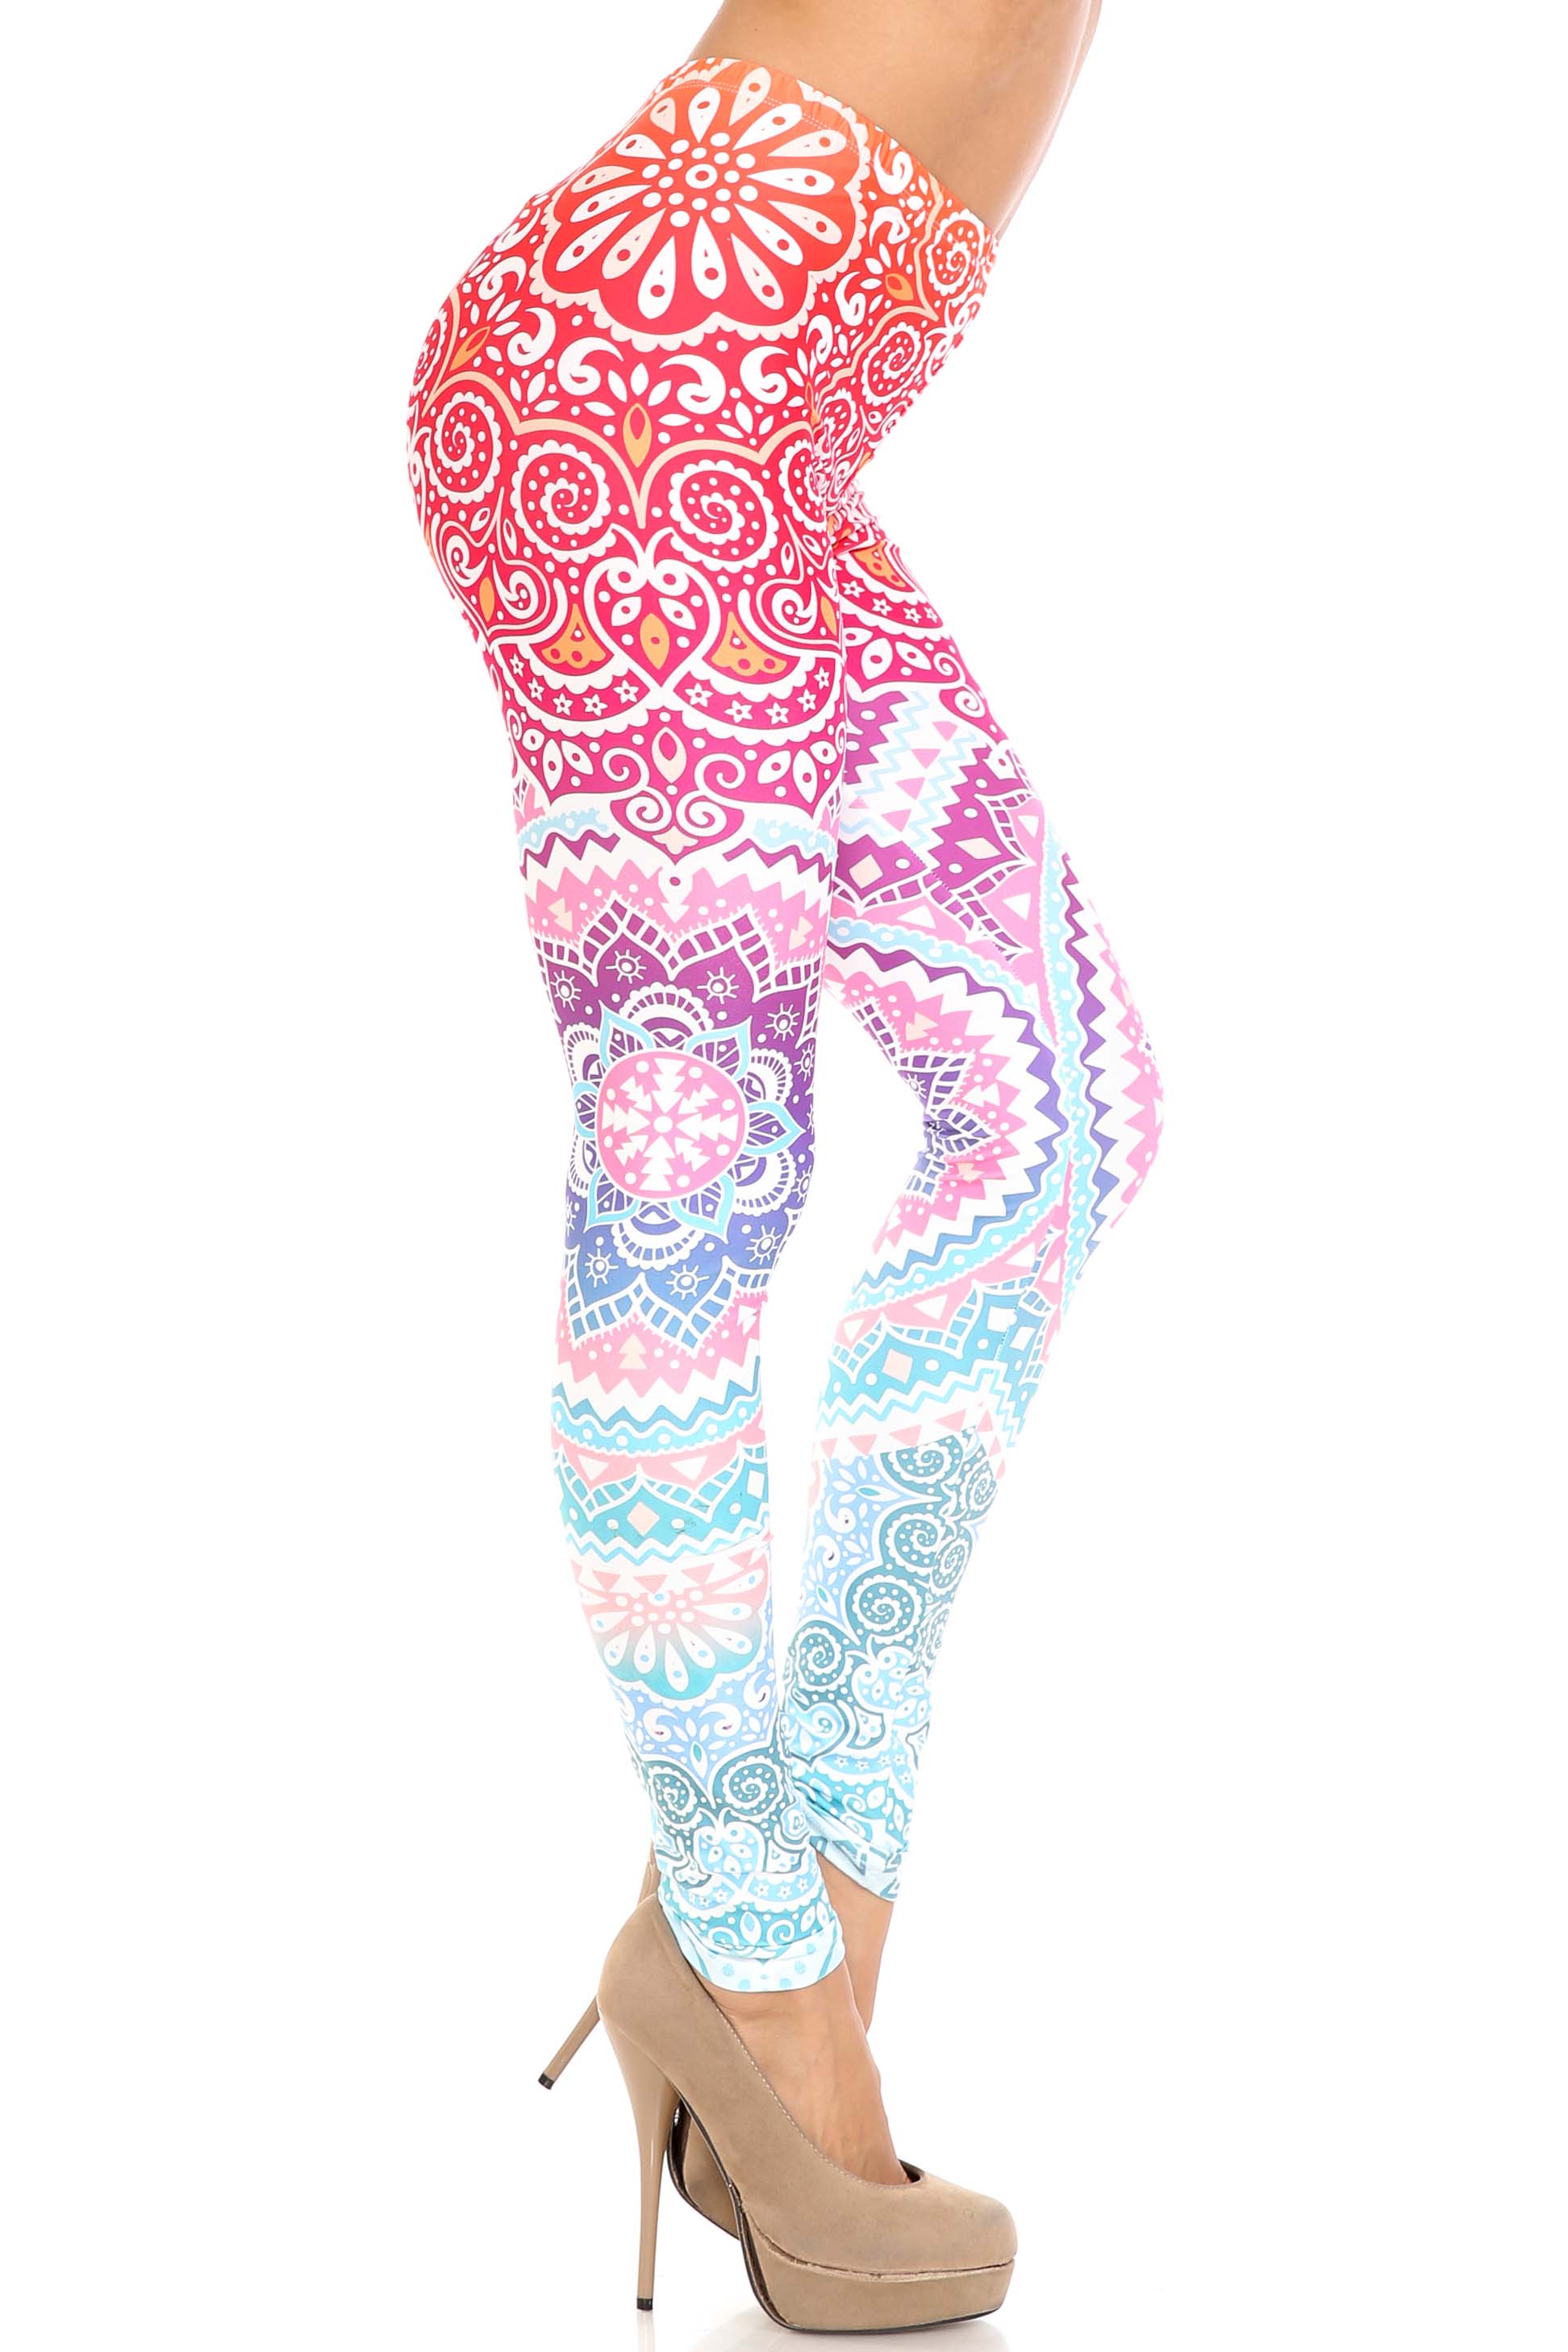 Wholesale Creamy Soft Ombre Mandala Aztec Extra Plus Size Leggings - 3X-5X - USA Fashion™